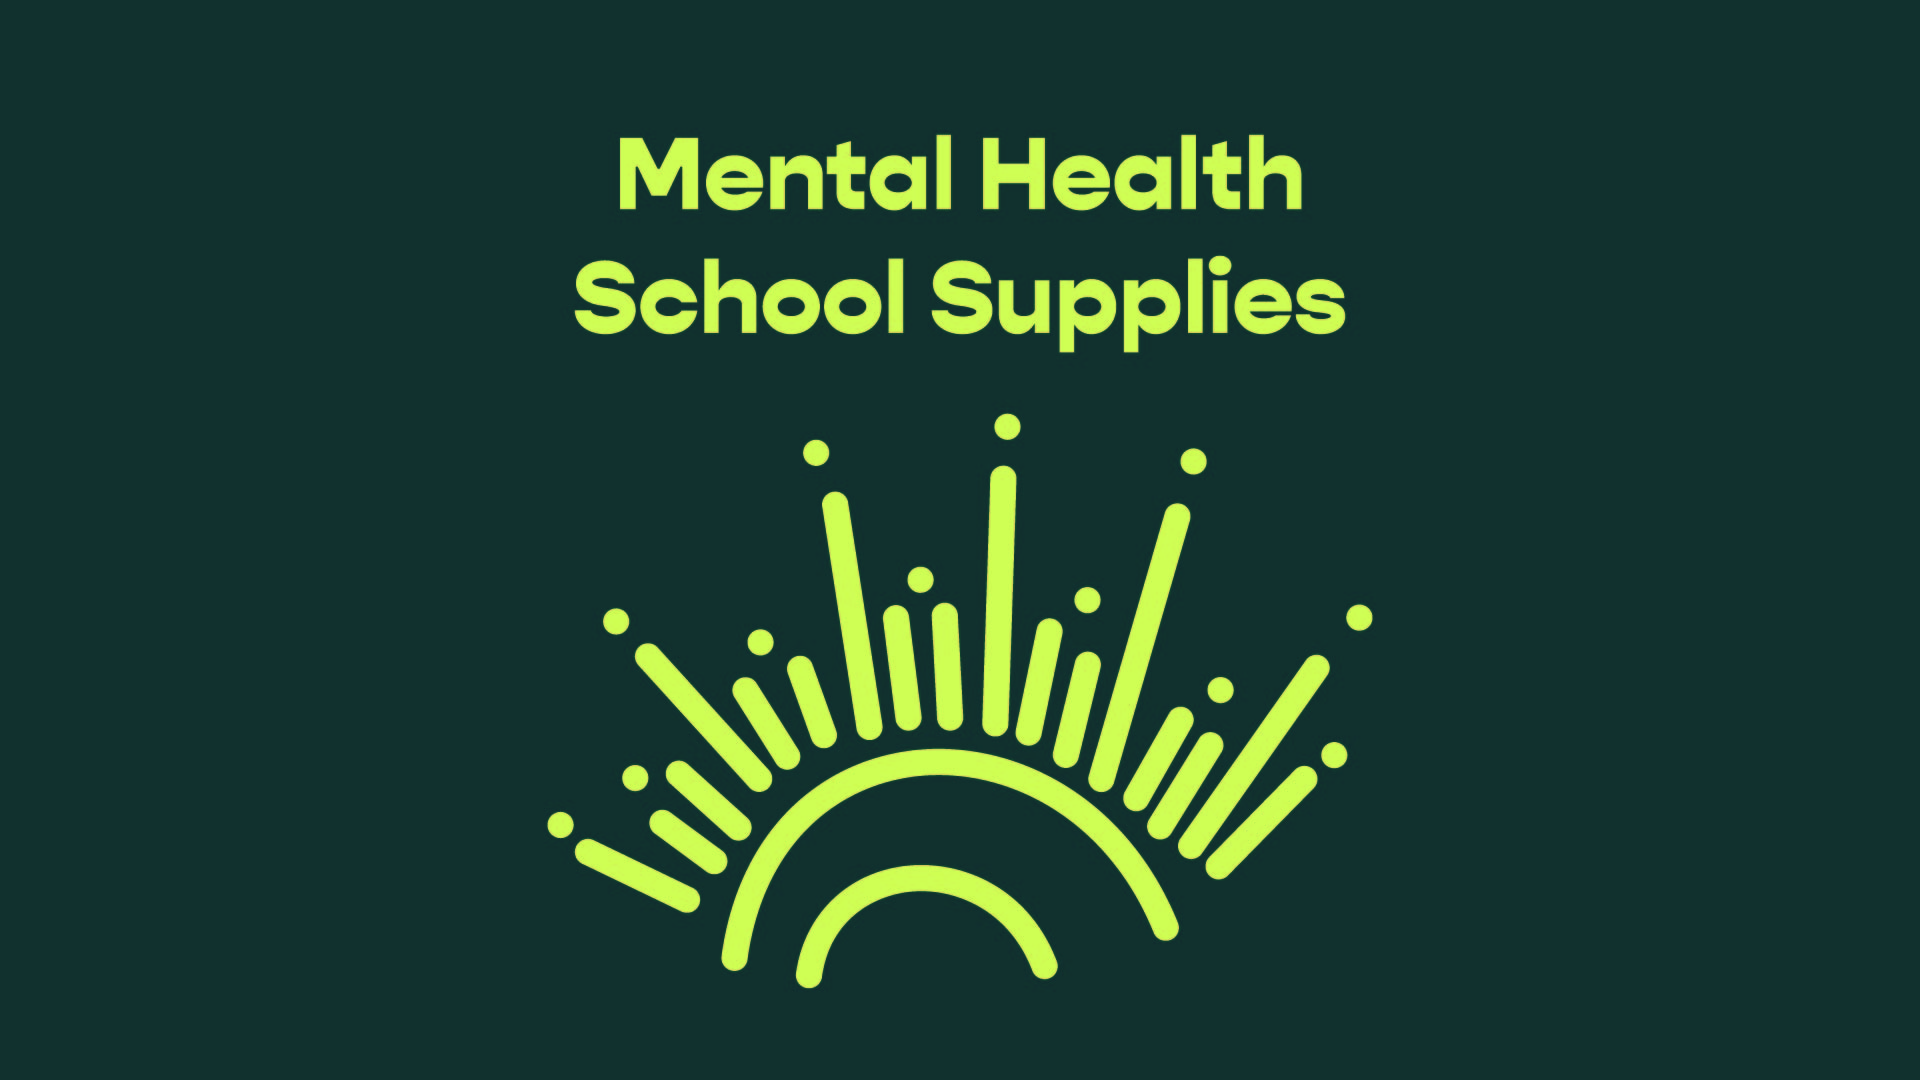 Mental Health School Supplies with sunshine illustration underneath